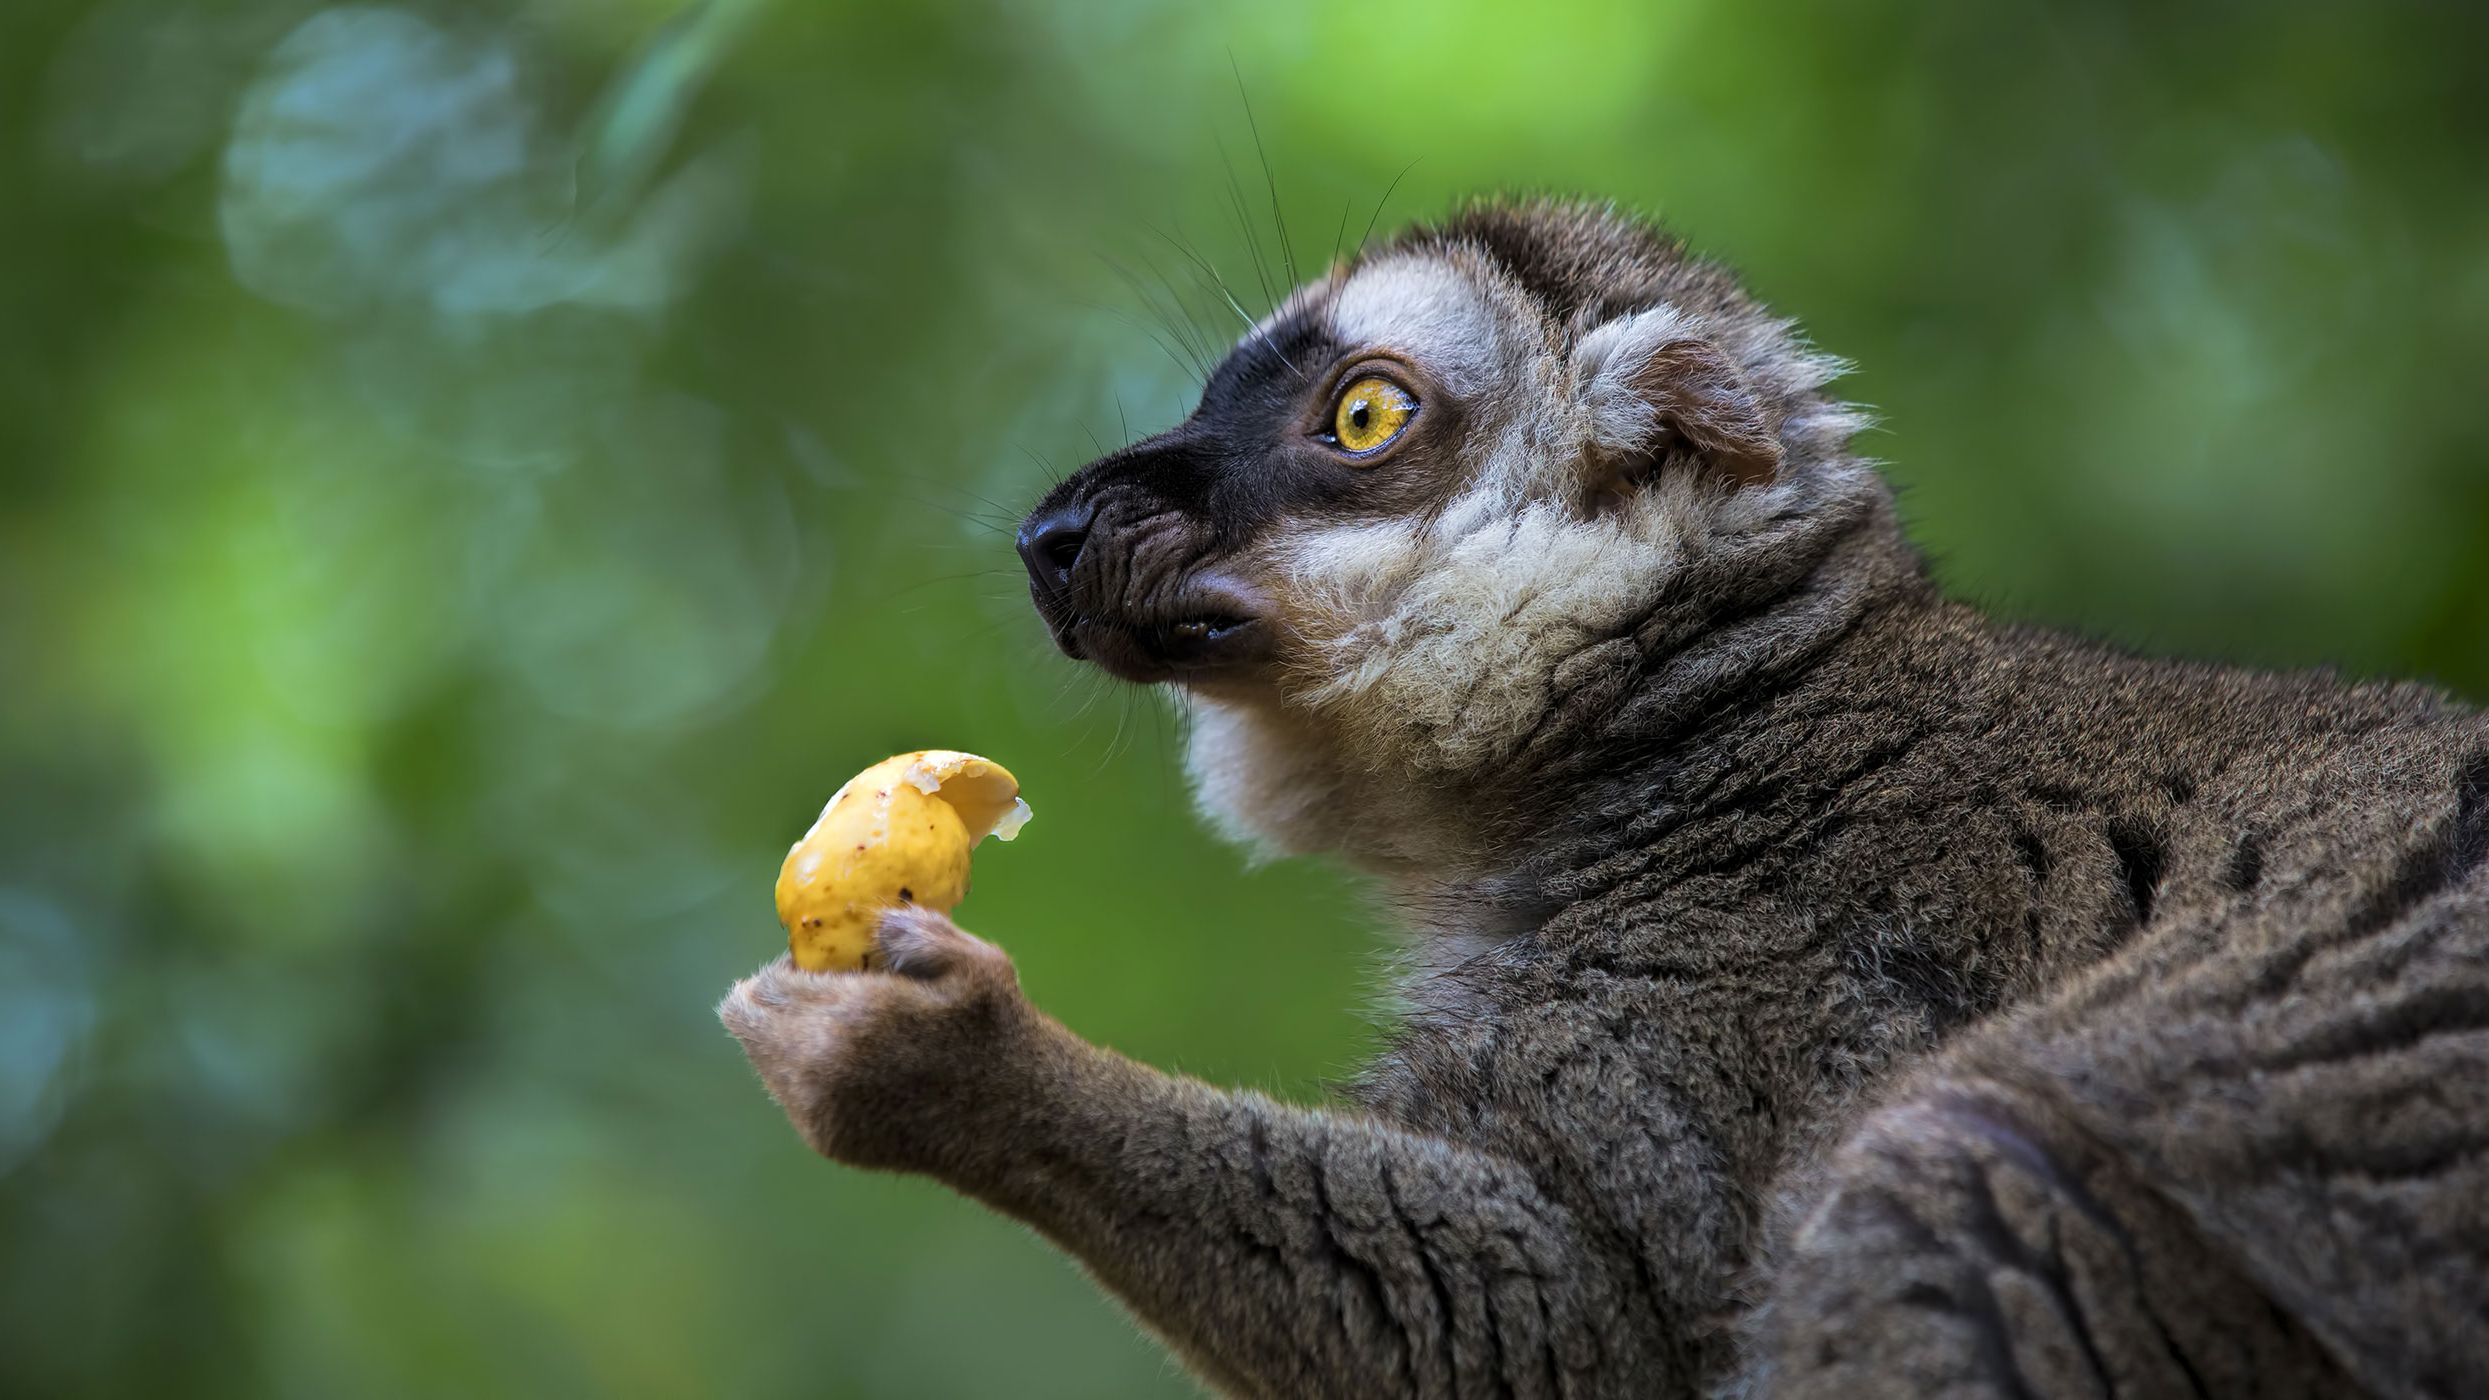 Species conservation volunteering: A feeding lemur in Madagascar